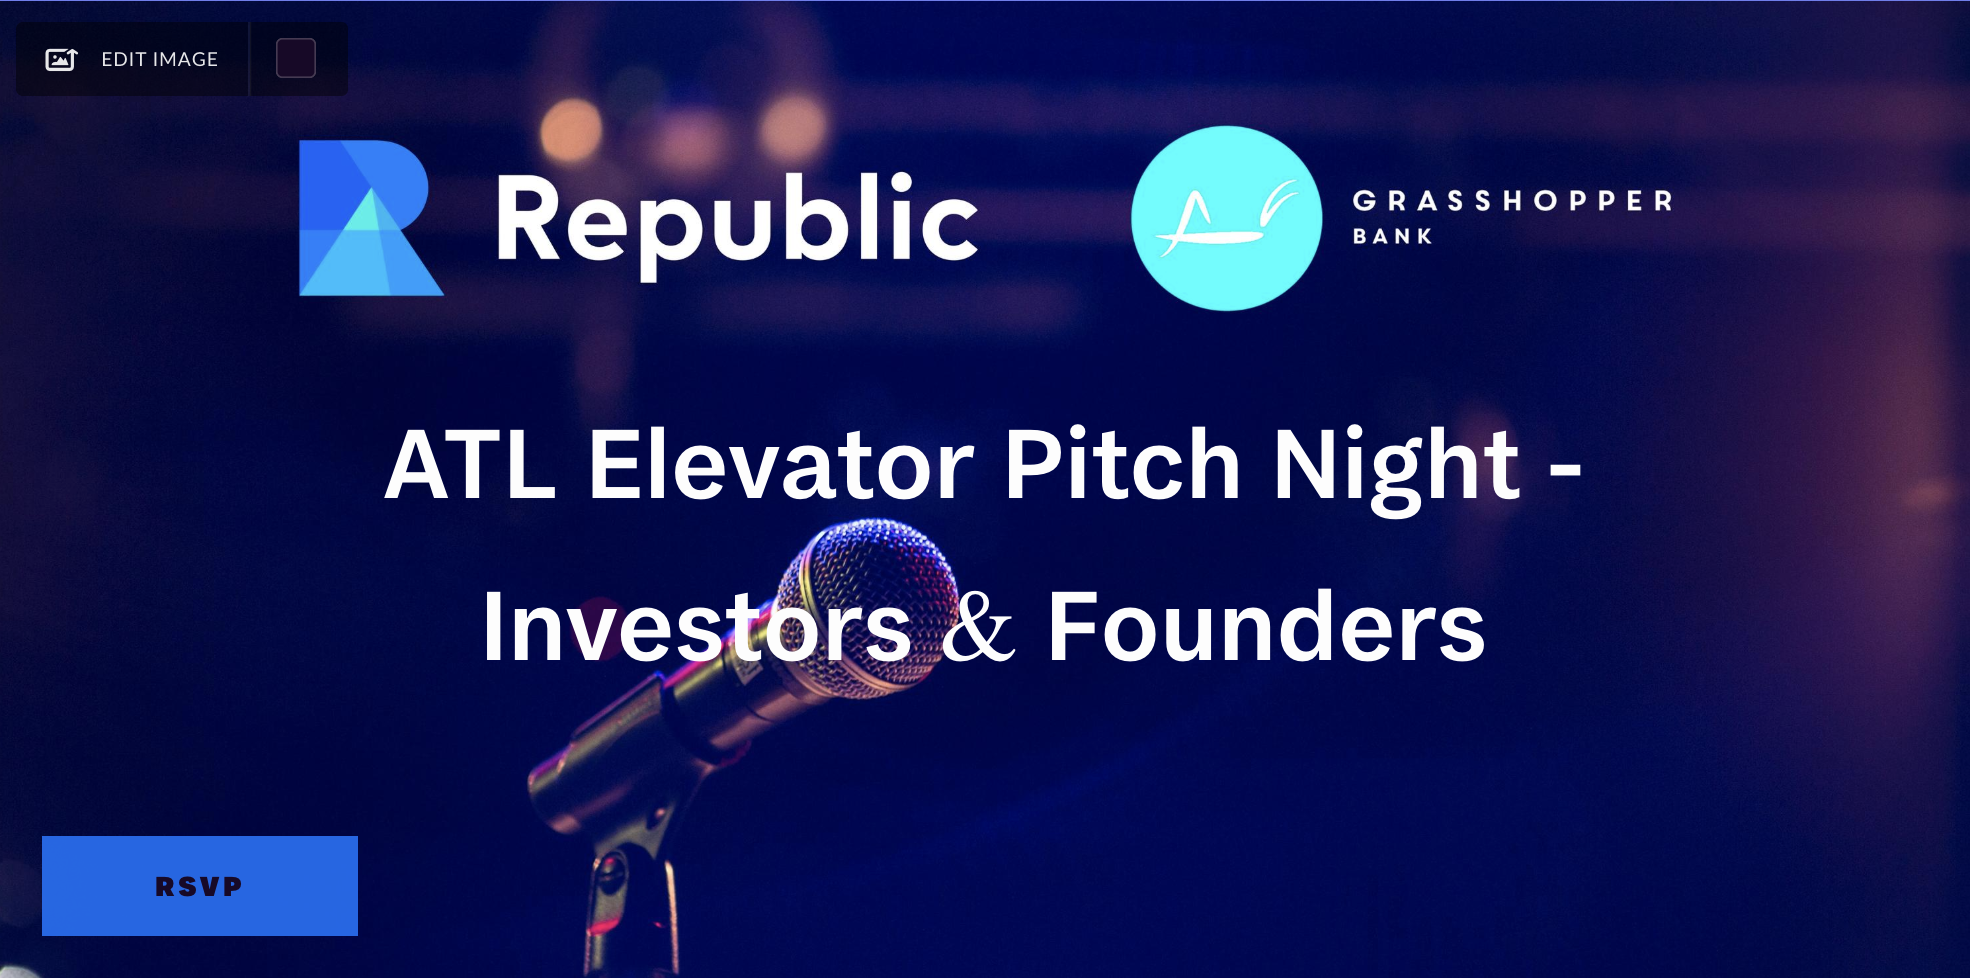 ATL Elevator Pitch Night - Investors & Funders